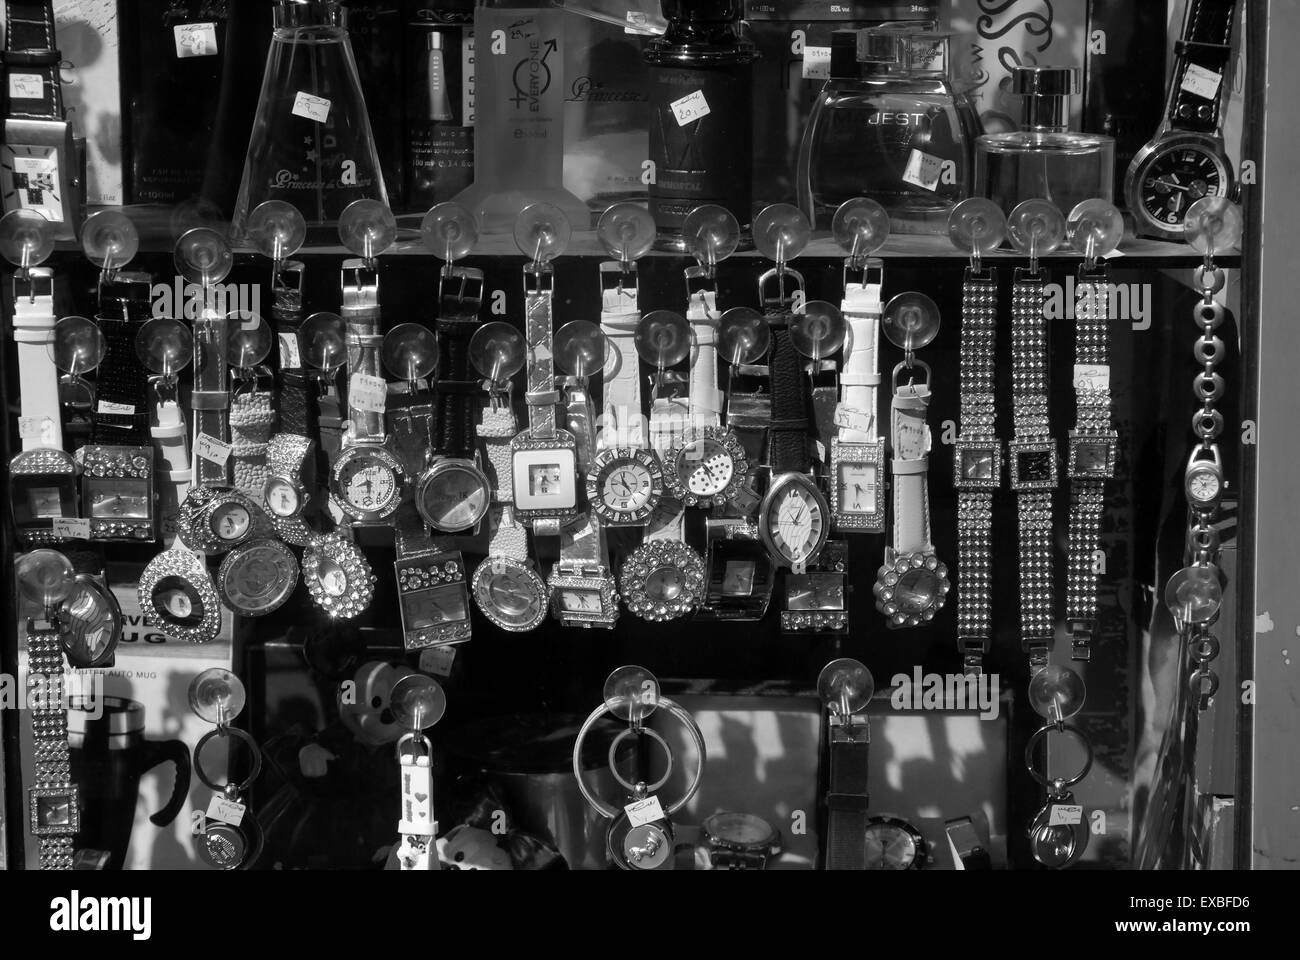 Watch shop, Cairo, Egypt Stock Photo